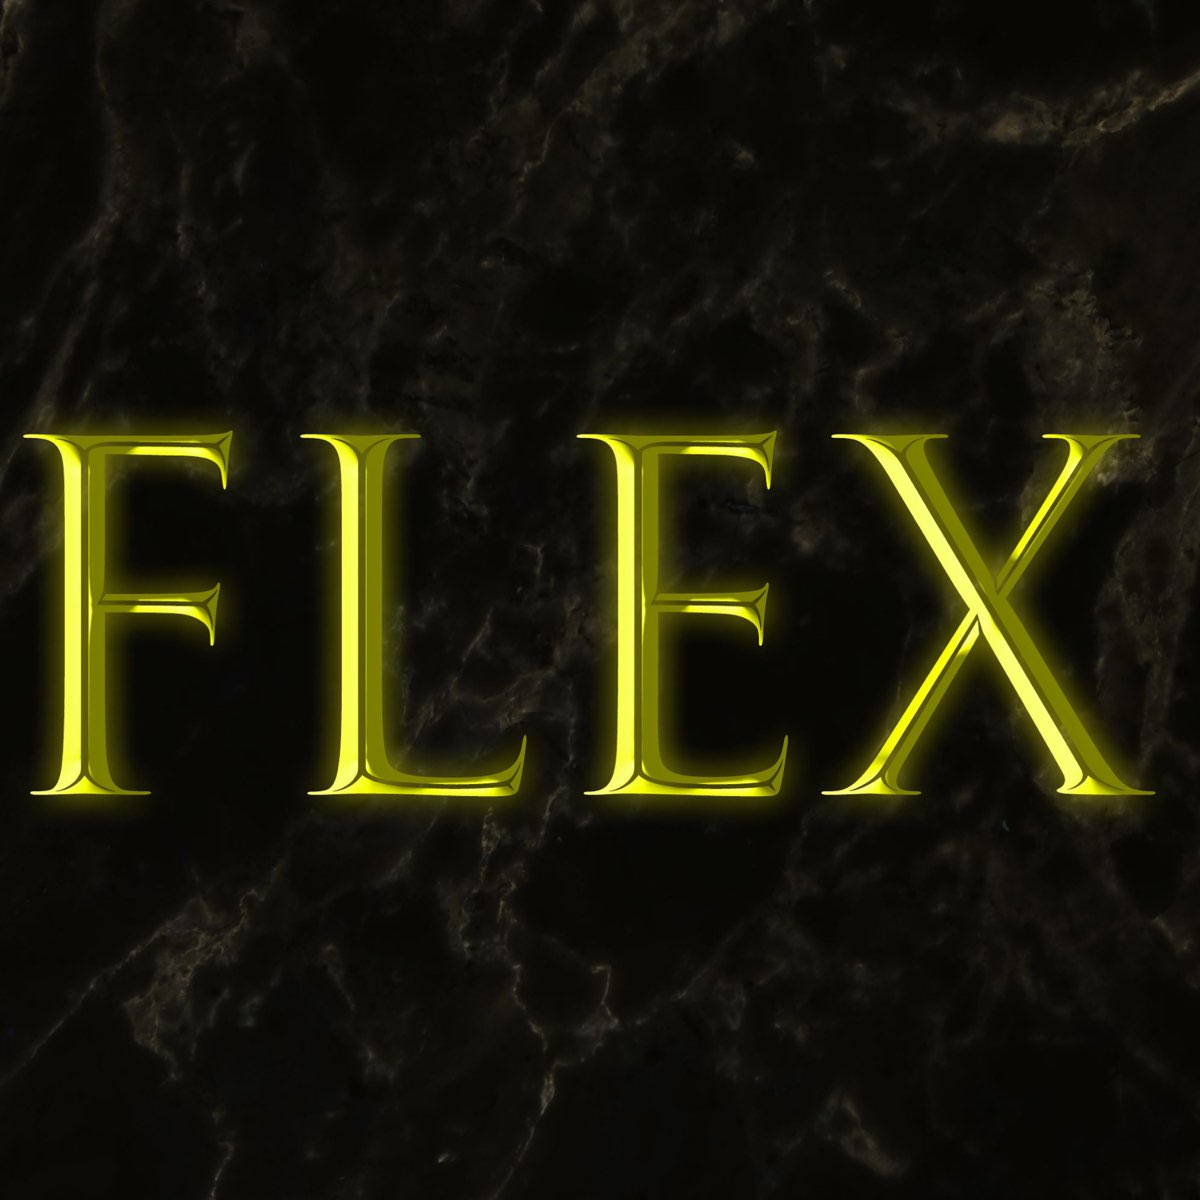 Lon flexx